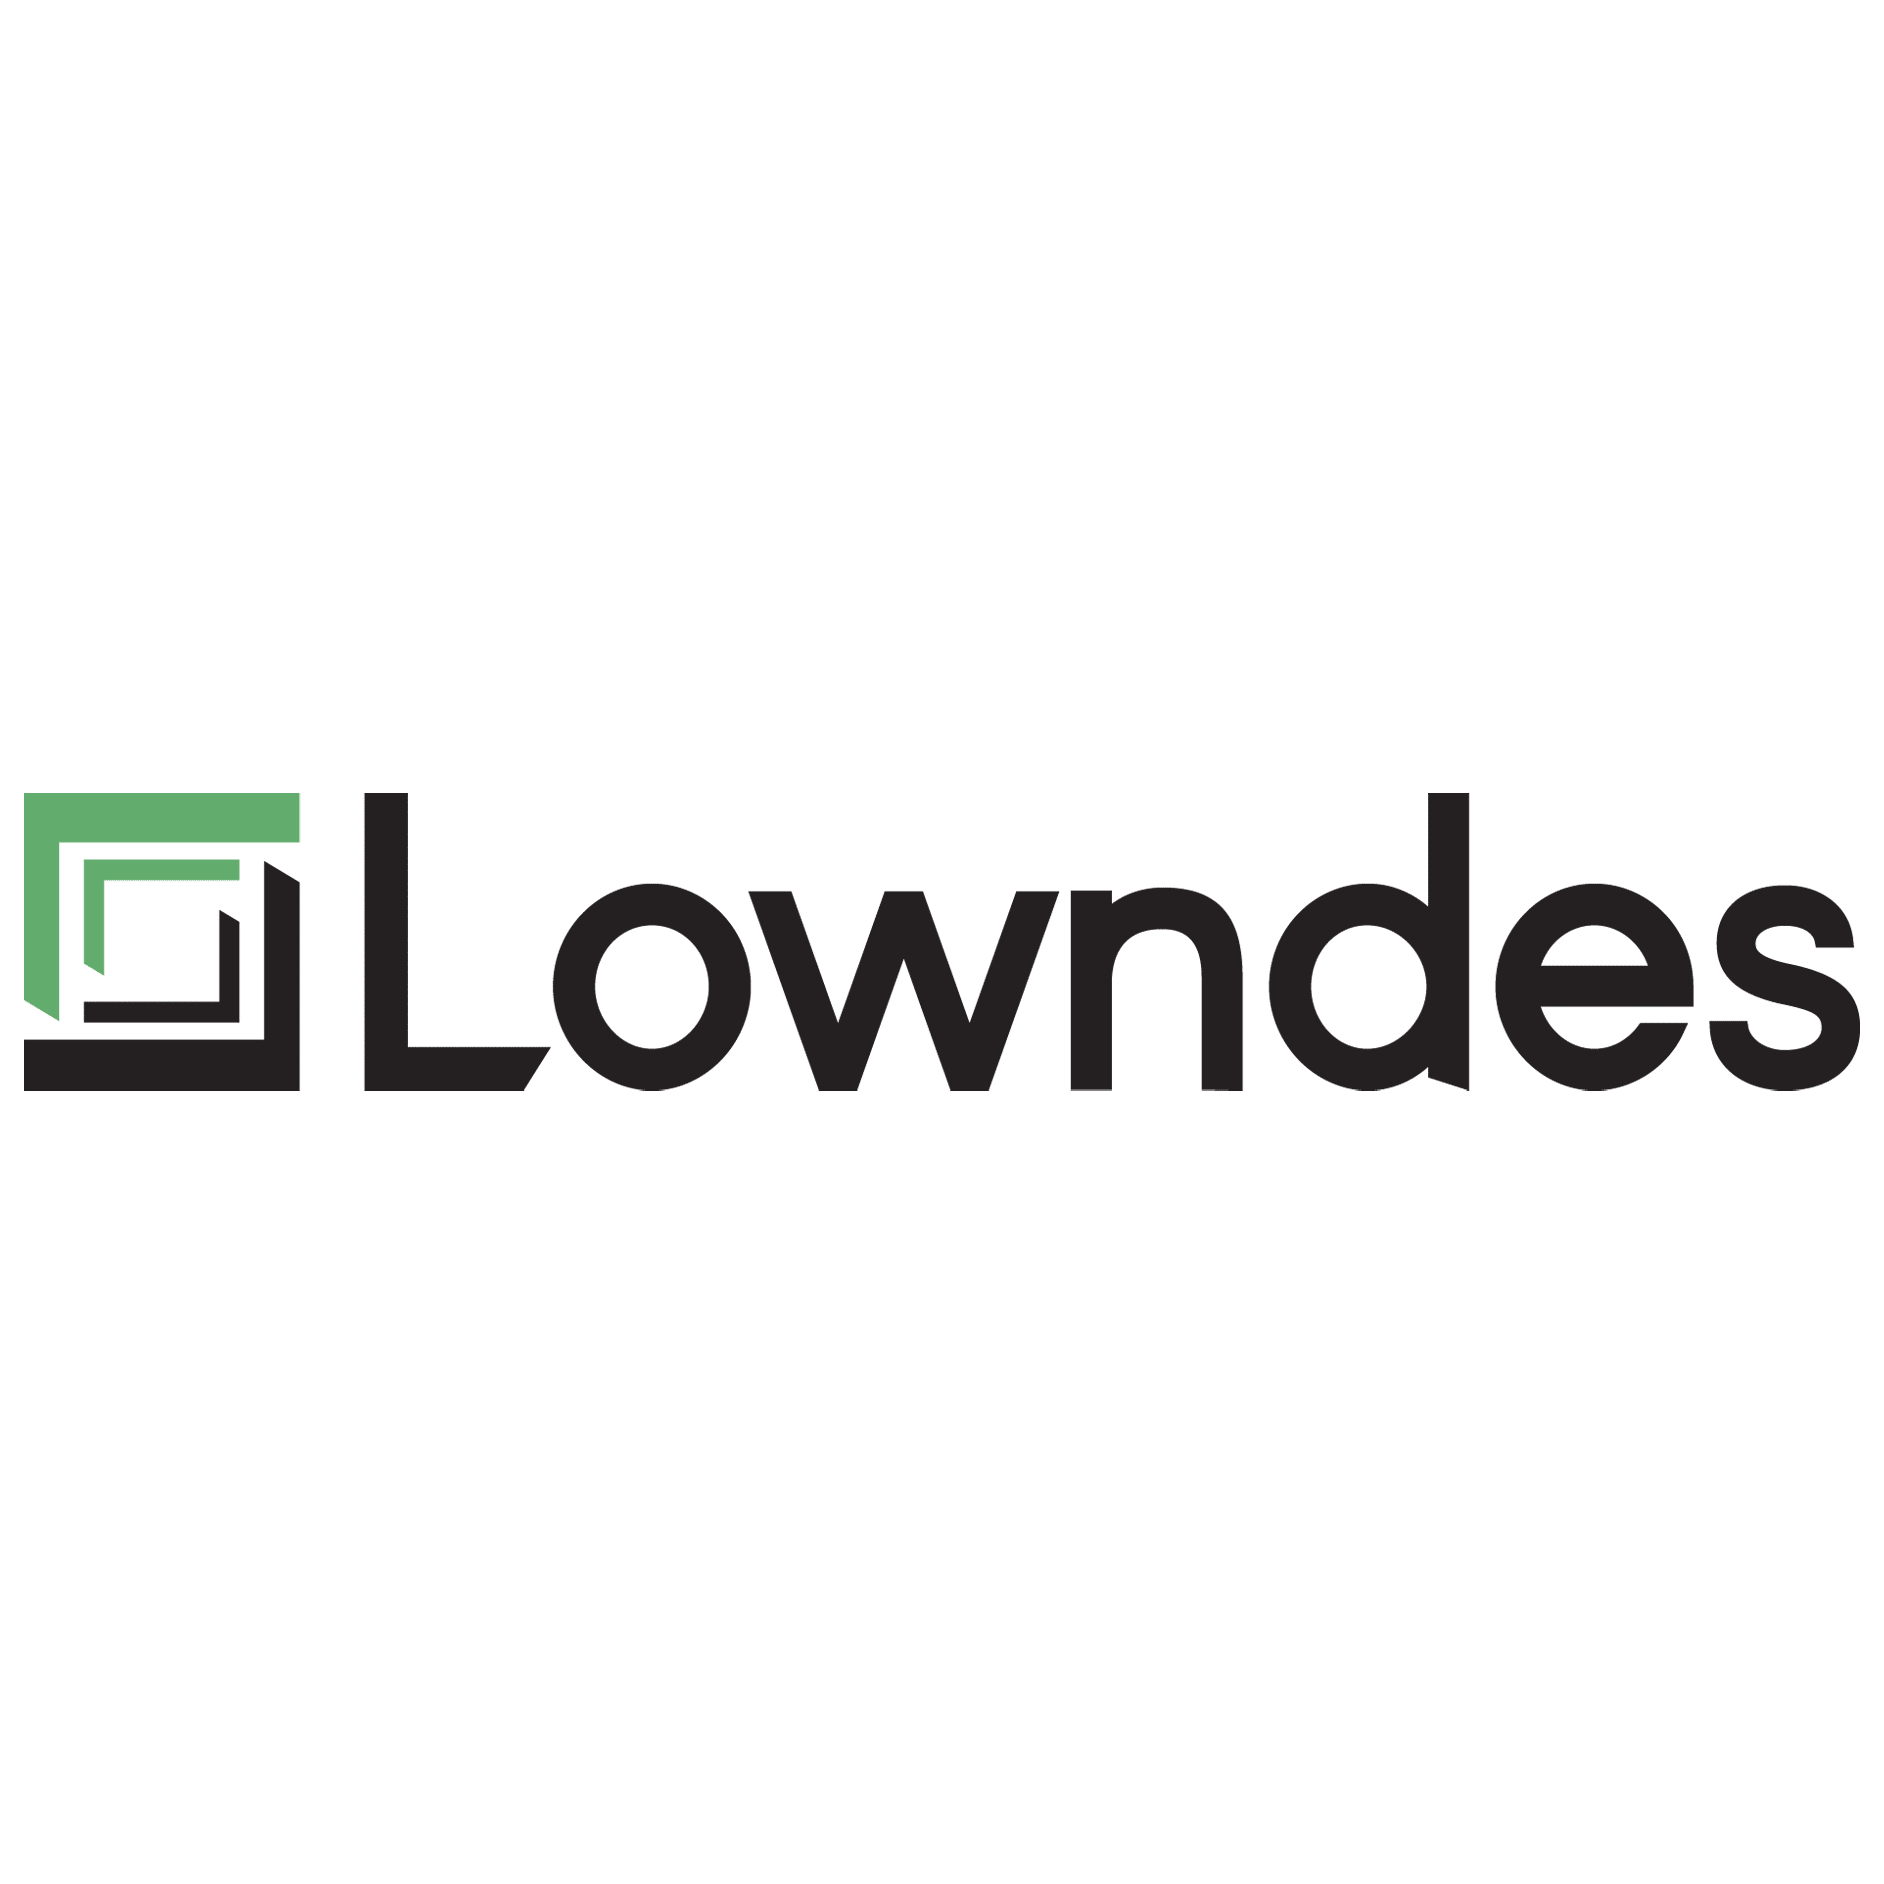 Lowndes